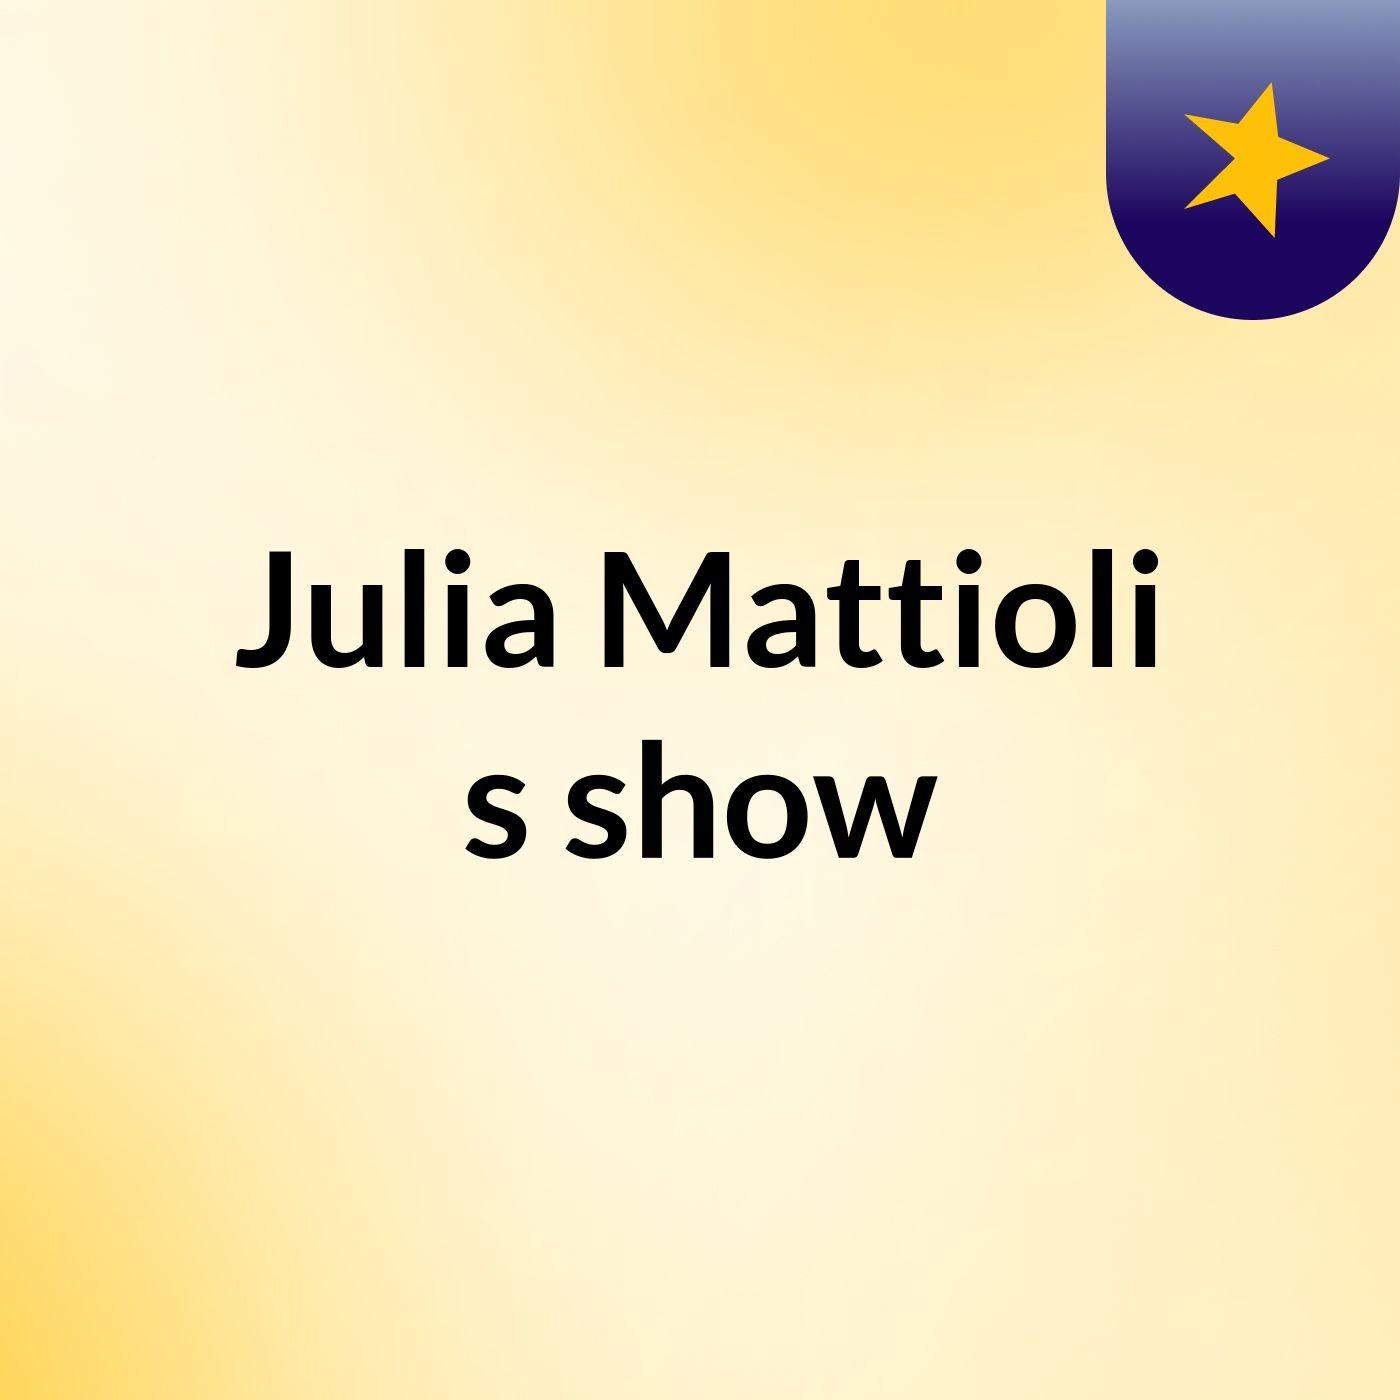 Julia Mattioli's show